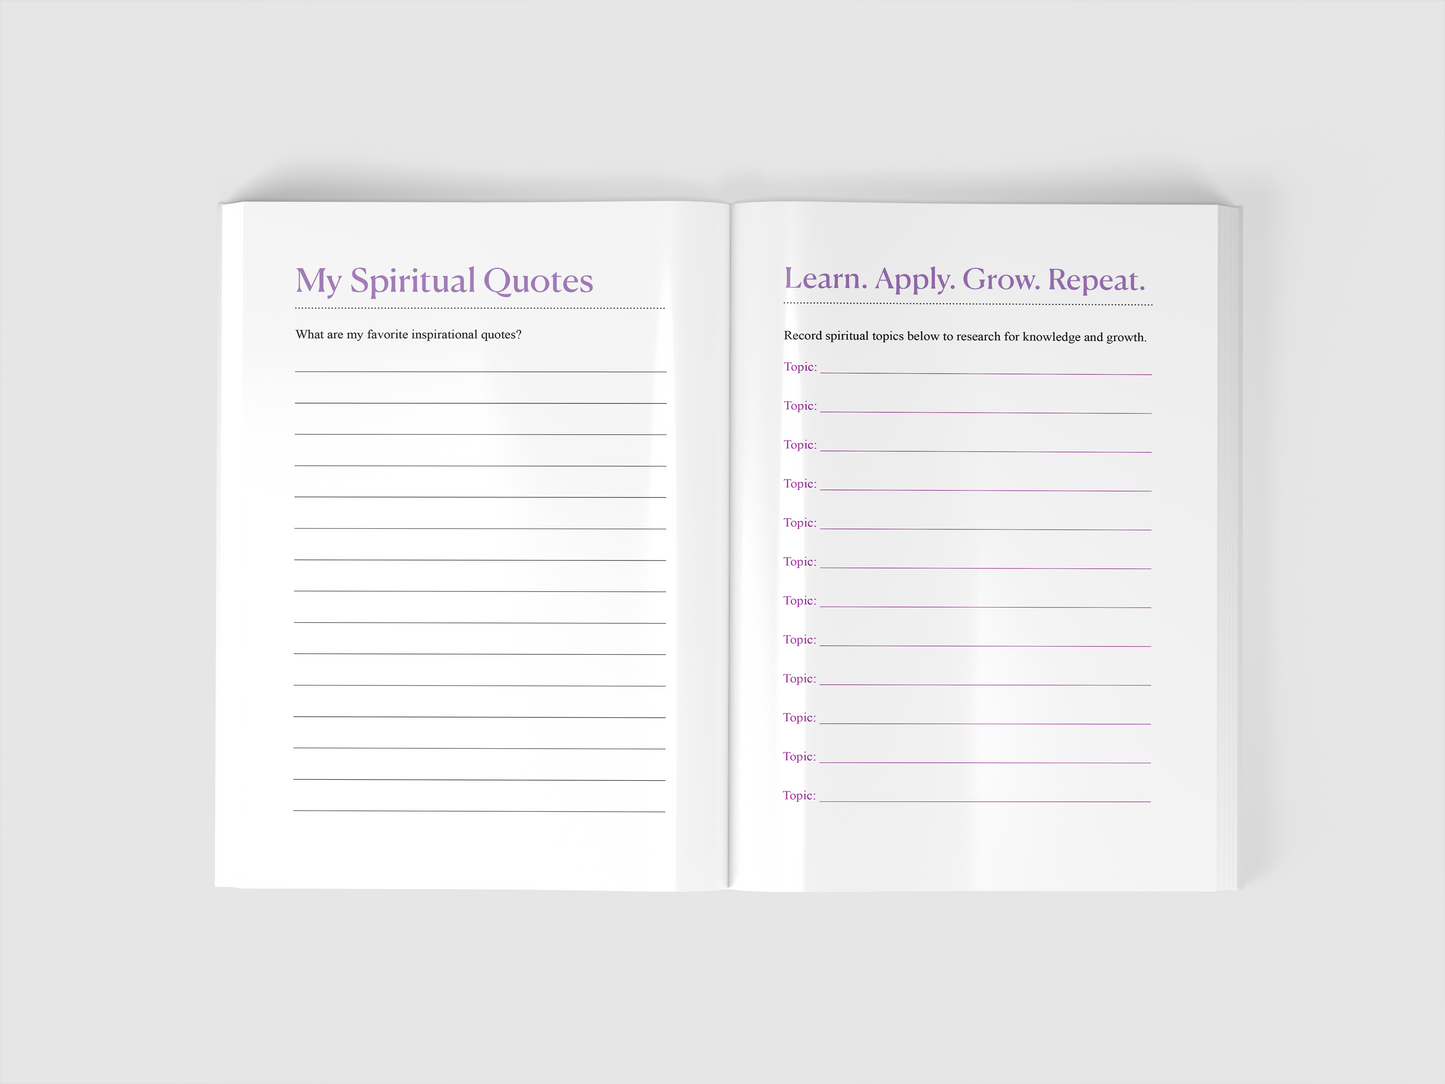 My Spiritual Journey Journal